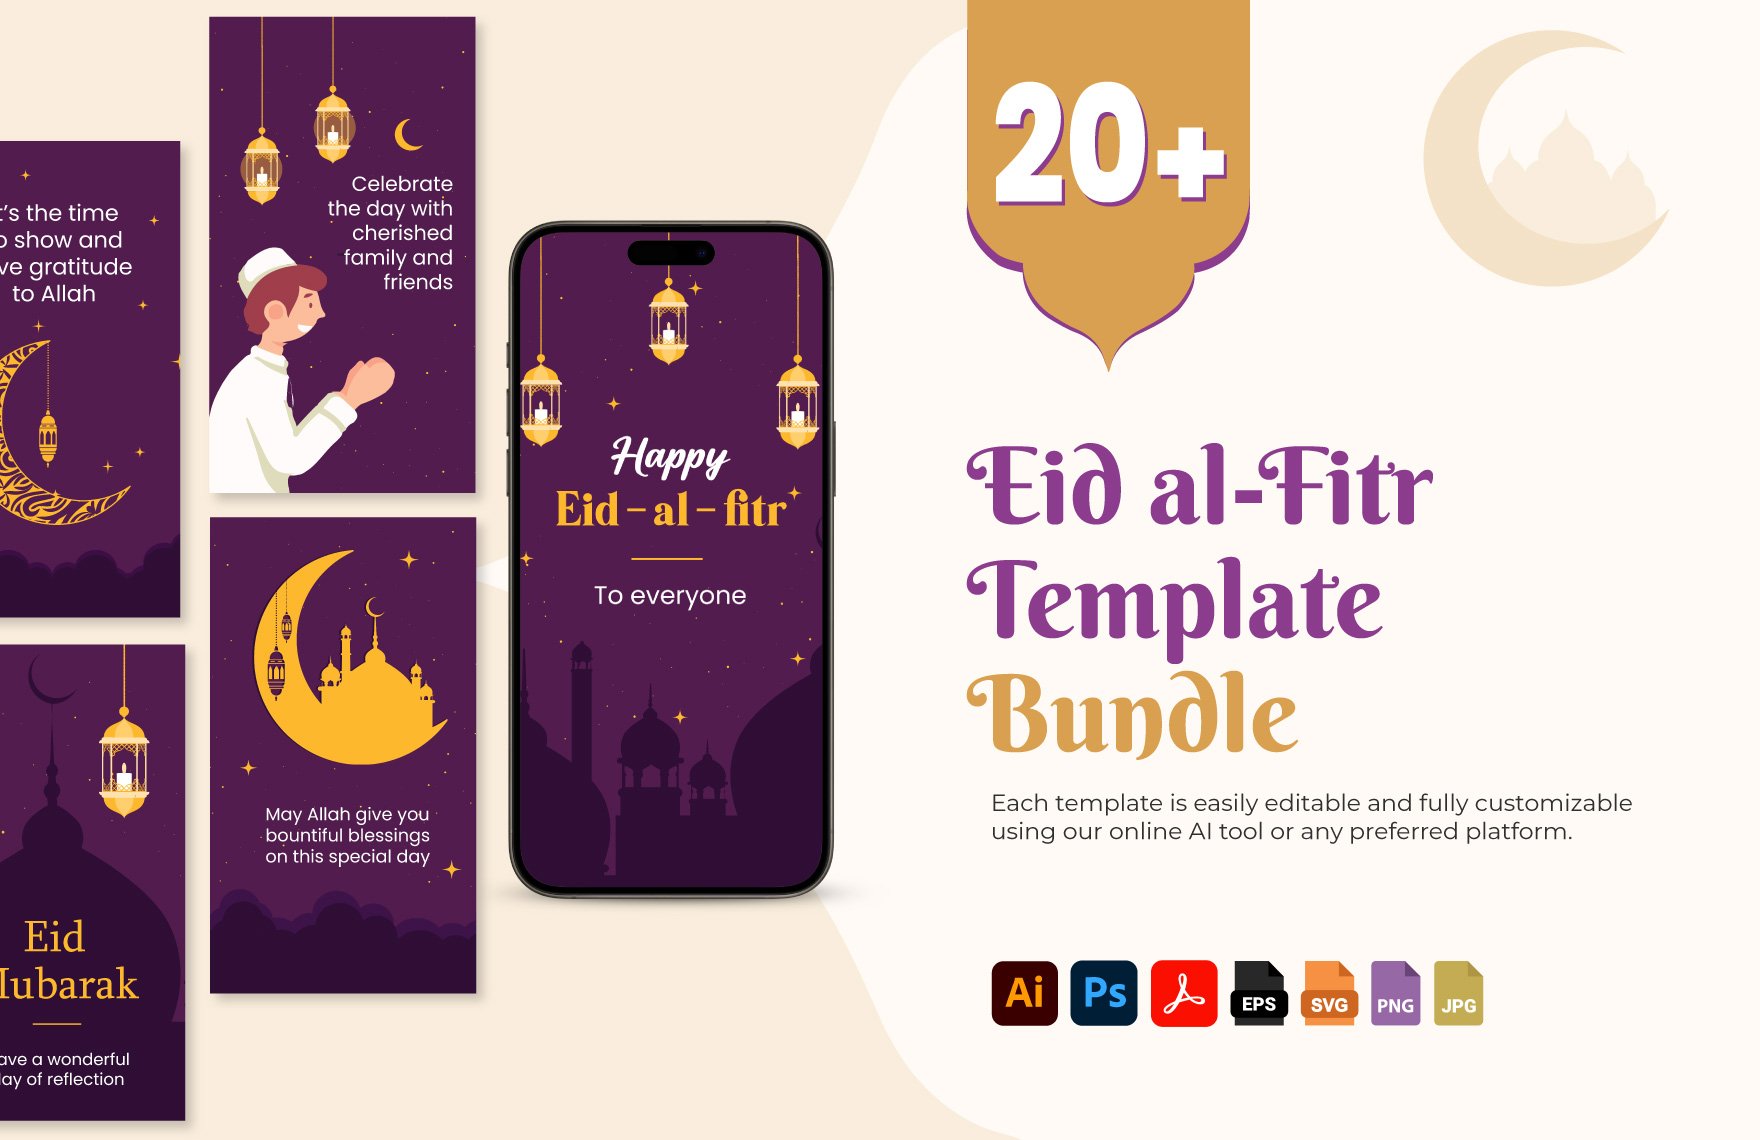 Free 20+ Eid al-Fitr Template Bundle in PDF, Illustrator, PSD, EPS, SVG, JPG, PNG